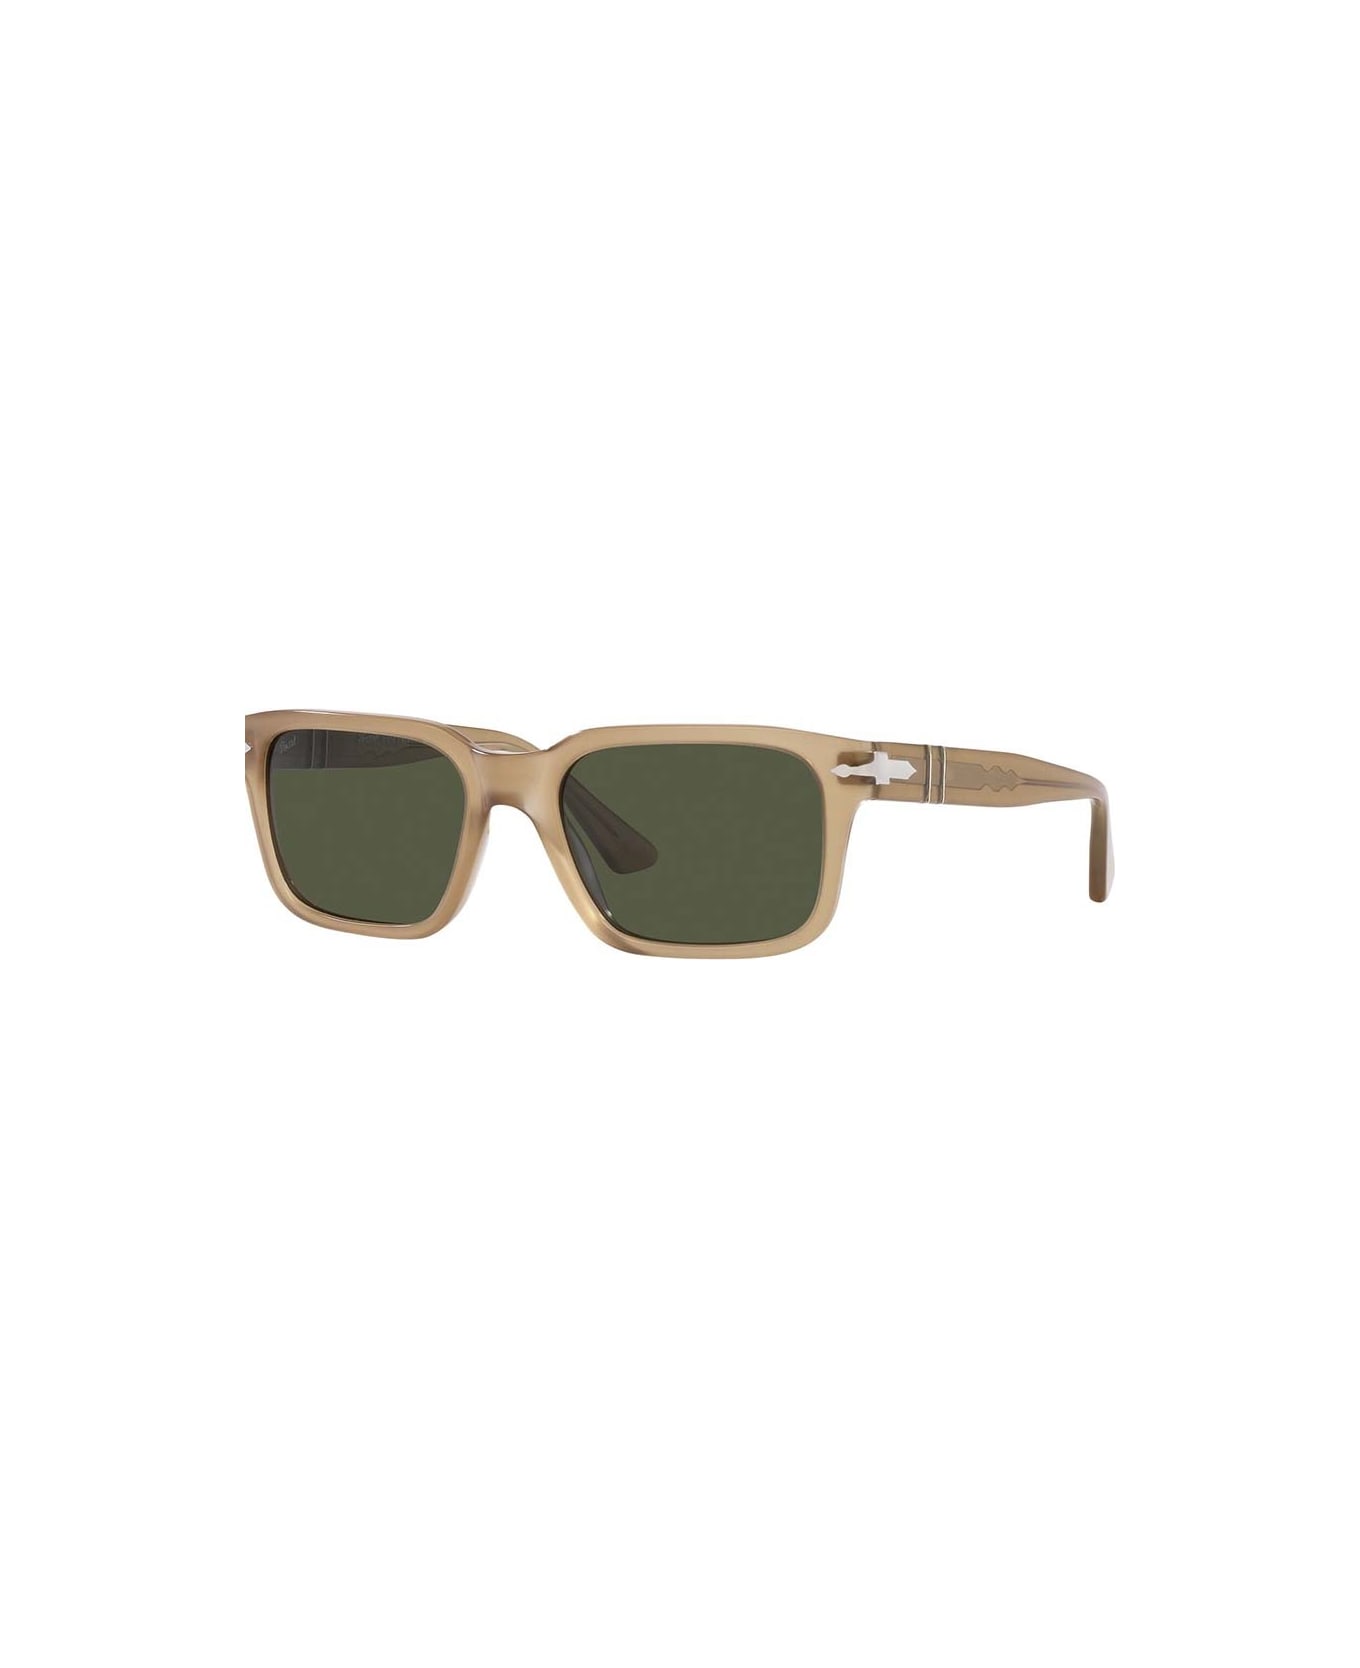 Persol Sunglasses - Beige/Verde